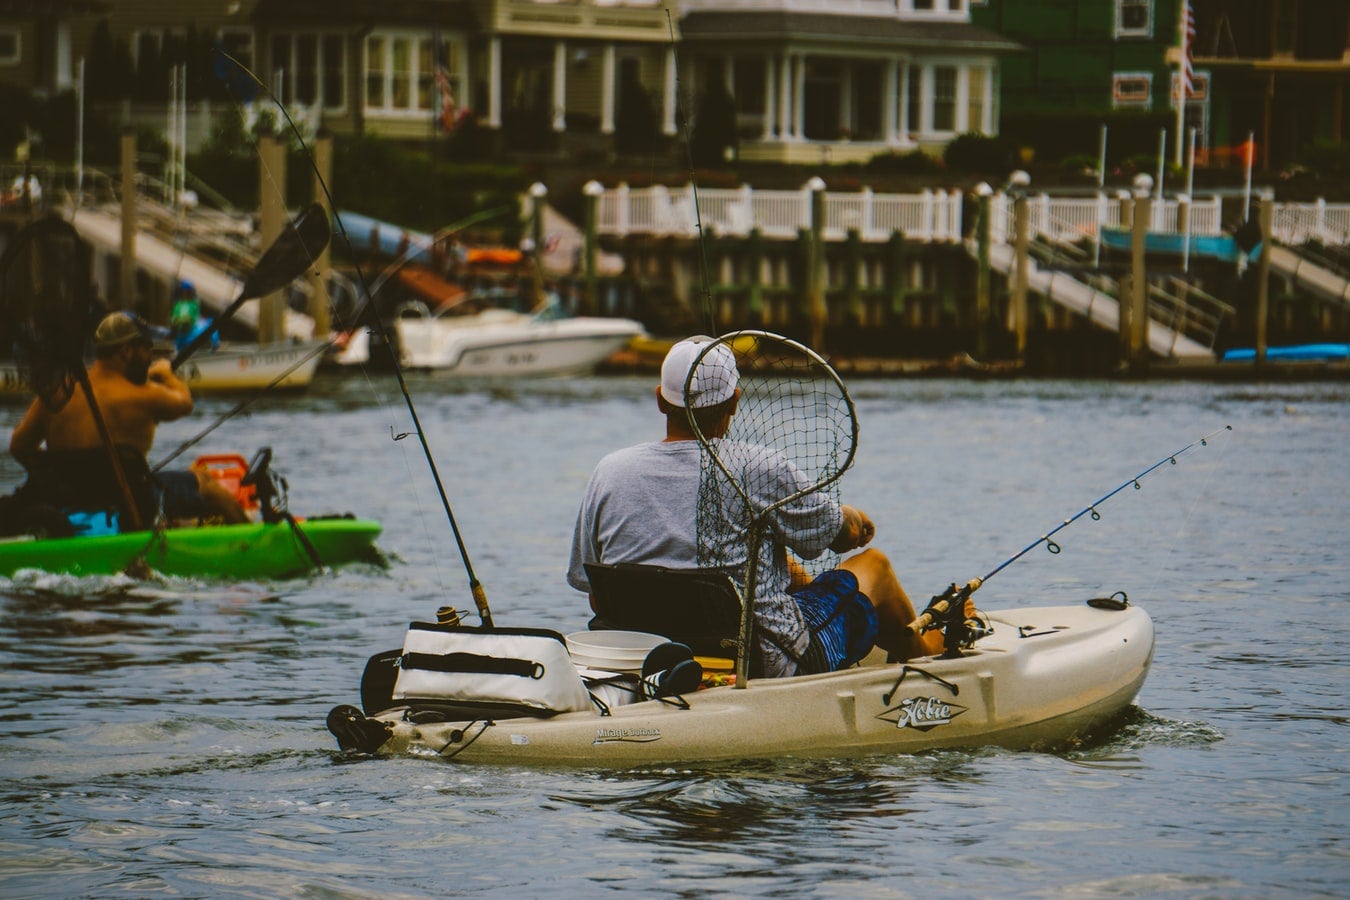 Kayak Coolers? - Bass Boats, Canoes, Kayaks and more - Bass